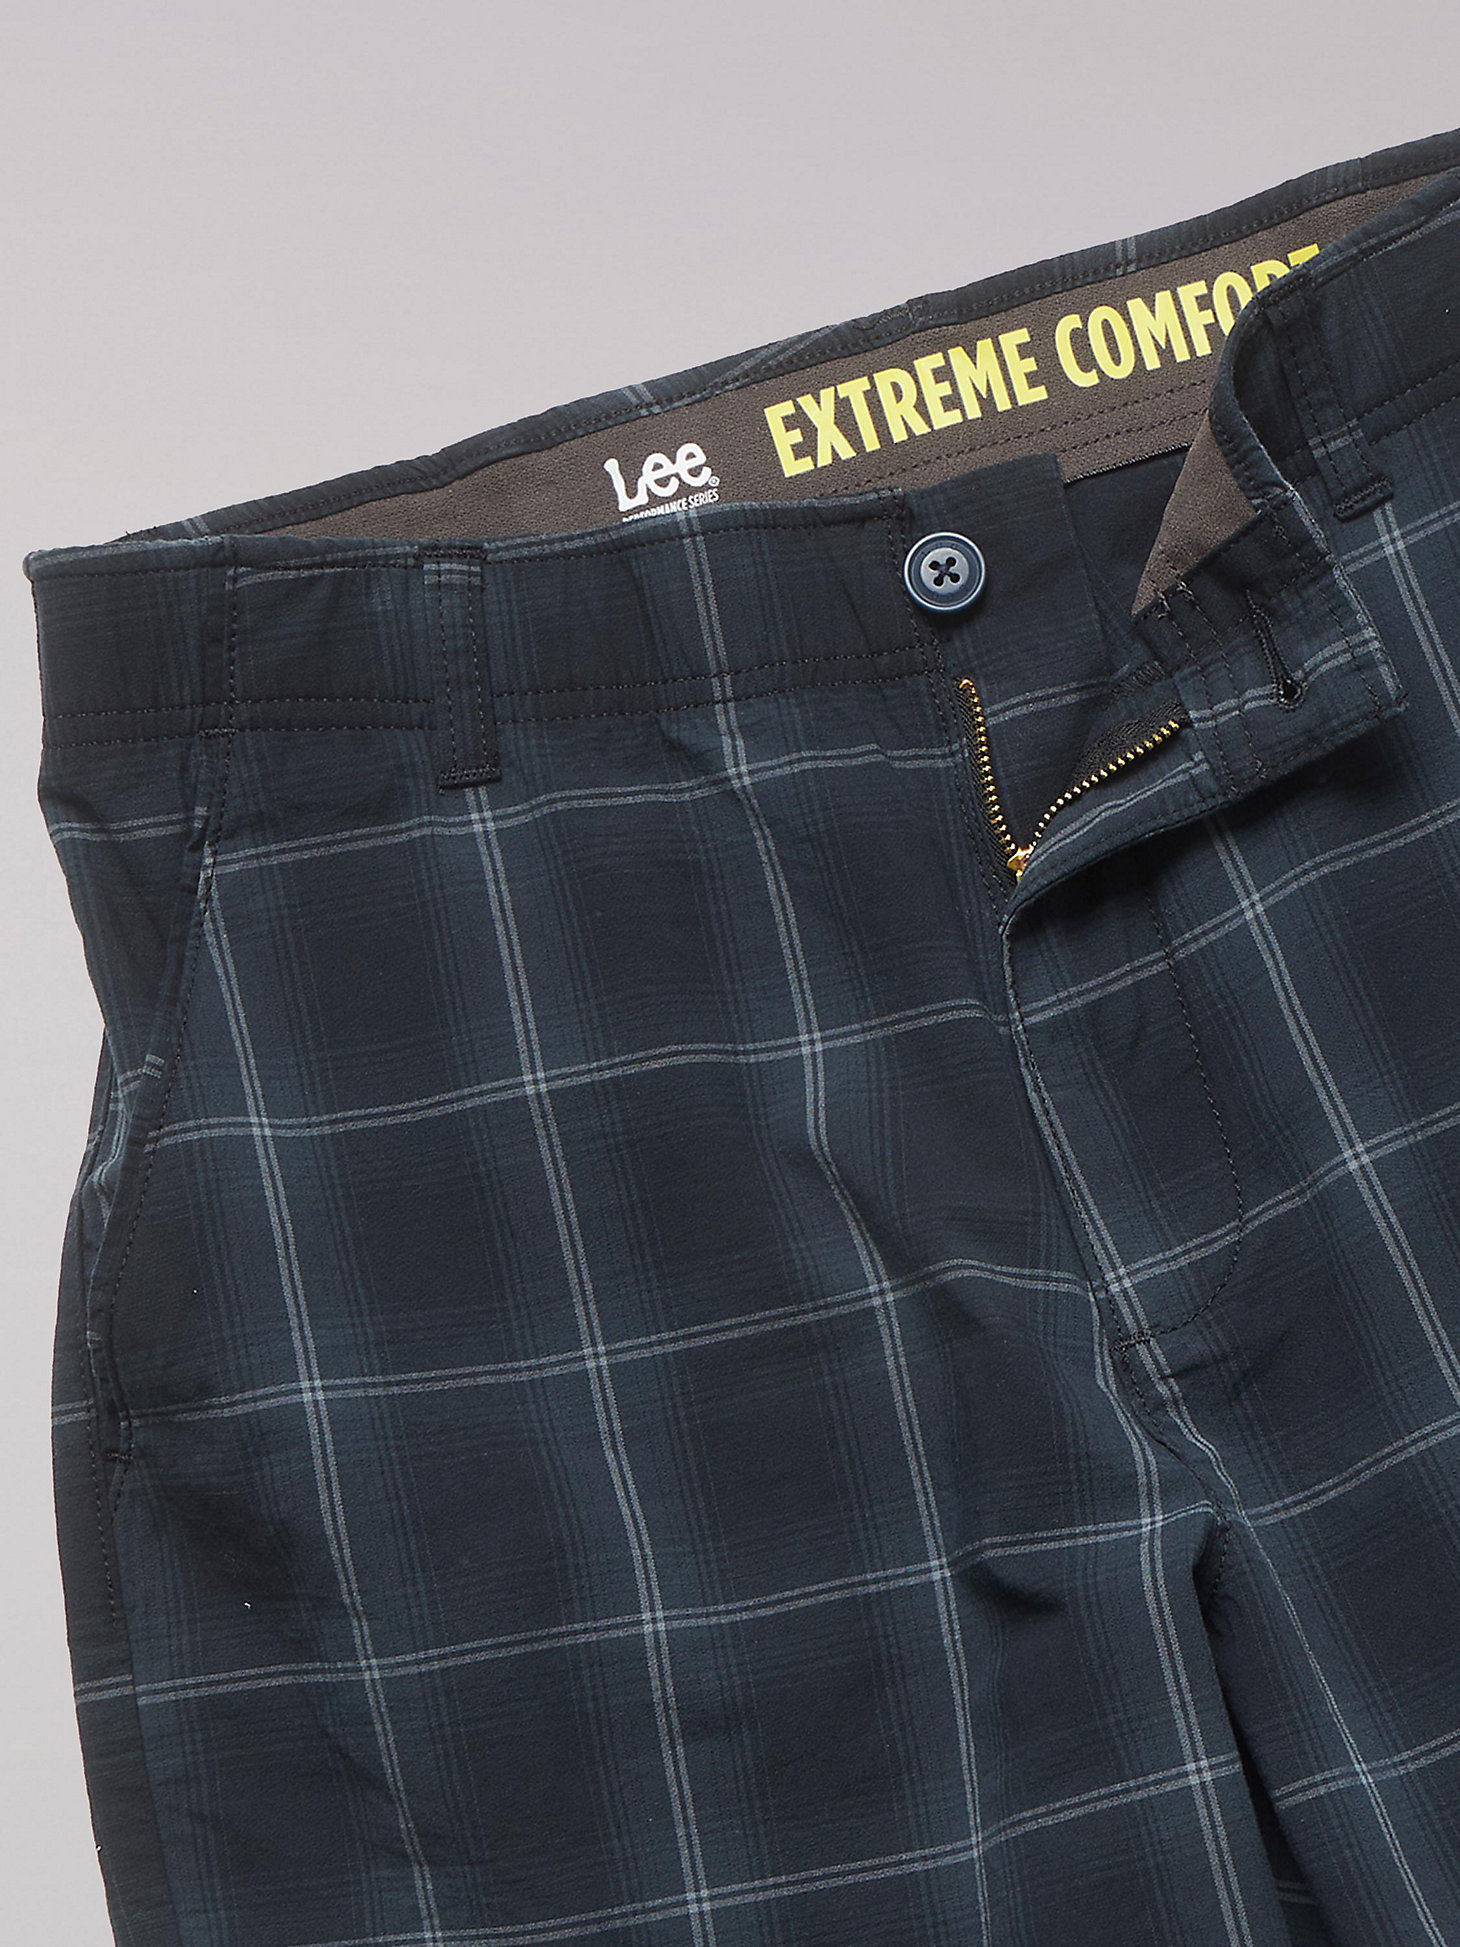 Men's Extreme Comfort Flat Front Short in Black Plaid alternative view 4